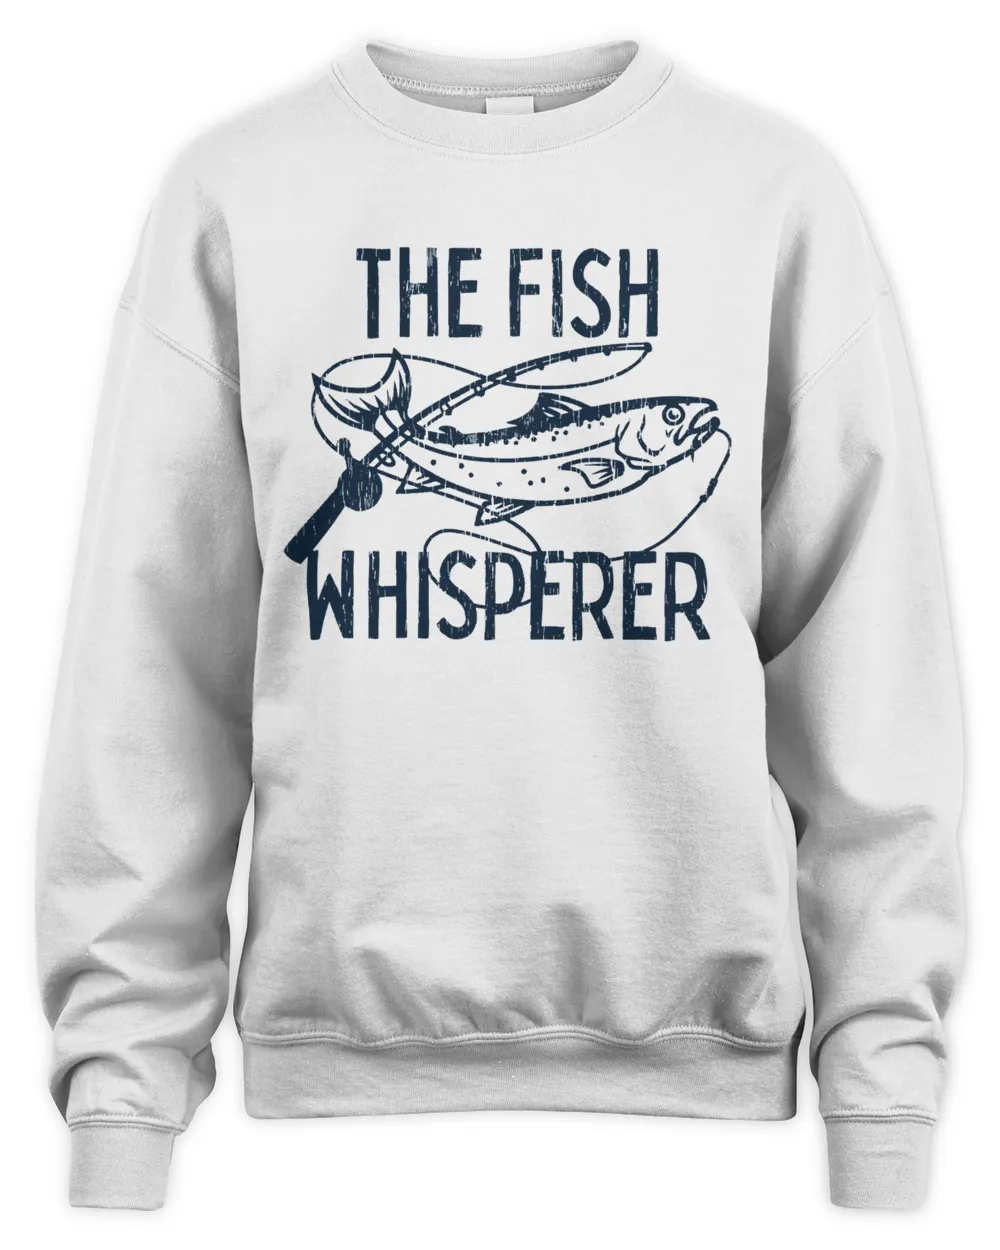 Mens Fishing T shirt, Funny Fishing Shirt, Fishing Graphic Tee, Fisherman Gifts, Present For fisherman, The Fish Whisperer